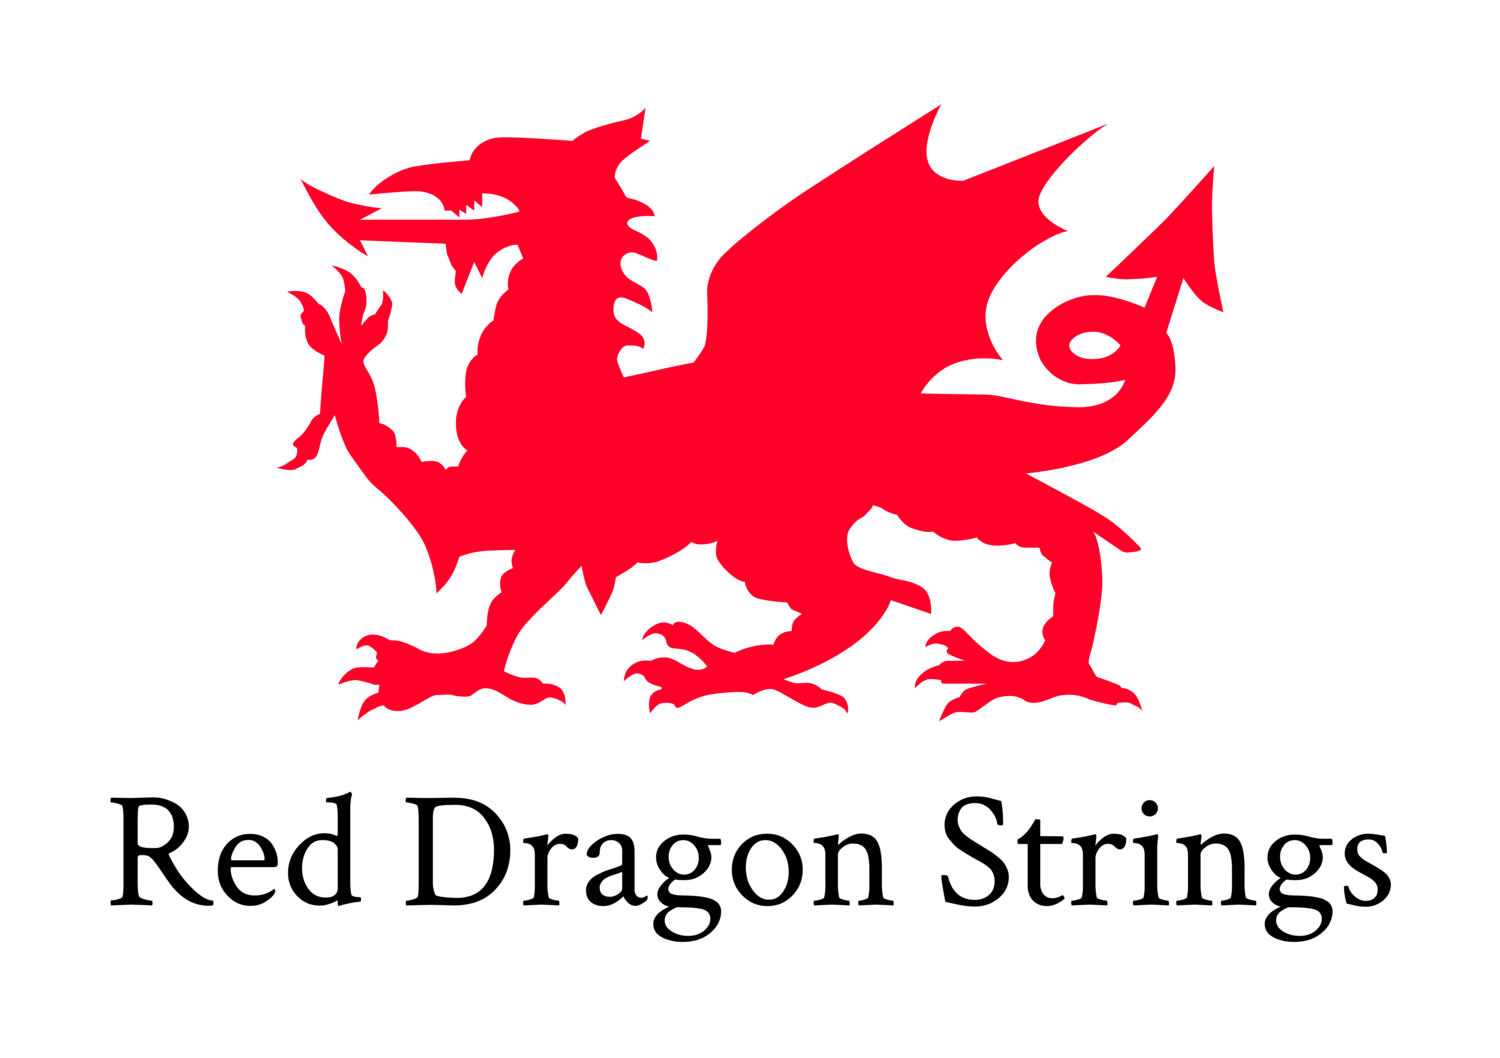 Дракон герб какого города. Красный дракон герб. Красный дракон Великобритании. Красный флаг с драконом черным. Wales герб.